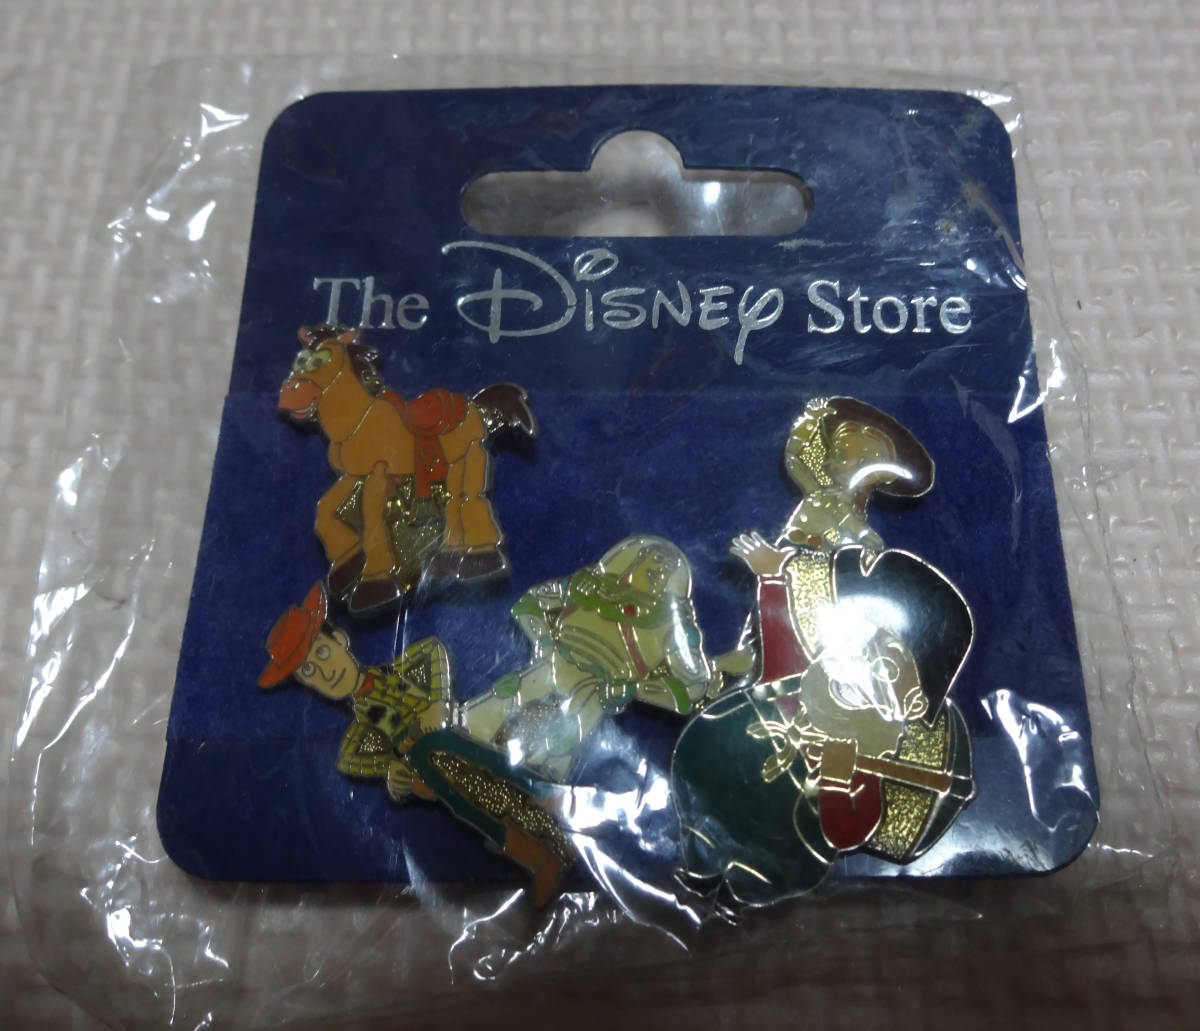  Toy Story 2/ woody bazje sheave ruz I Pro Spector pin badge / Disney / store pin z pin bachi5 piece insertion rare 